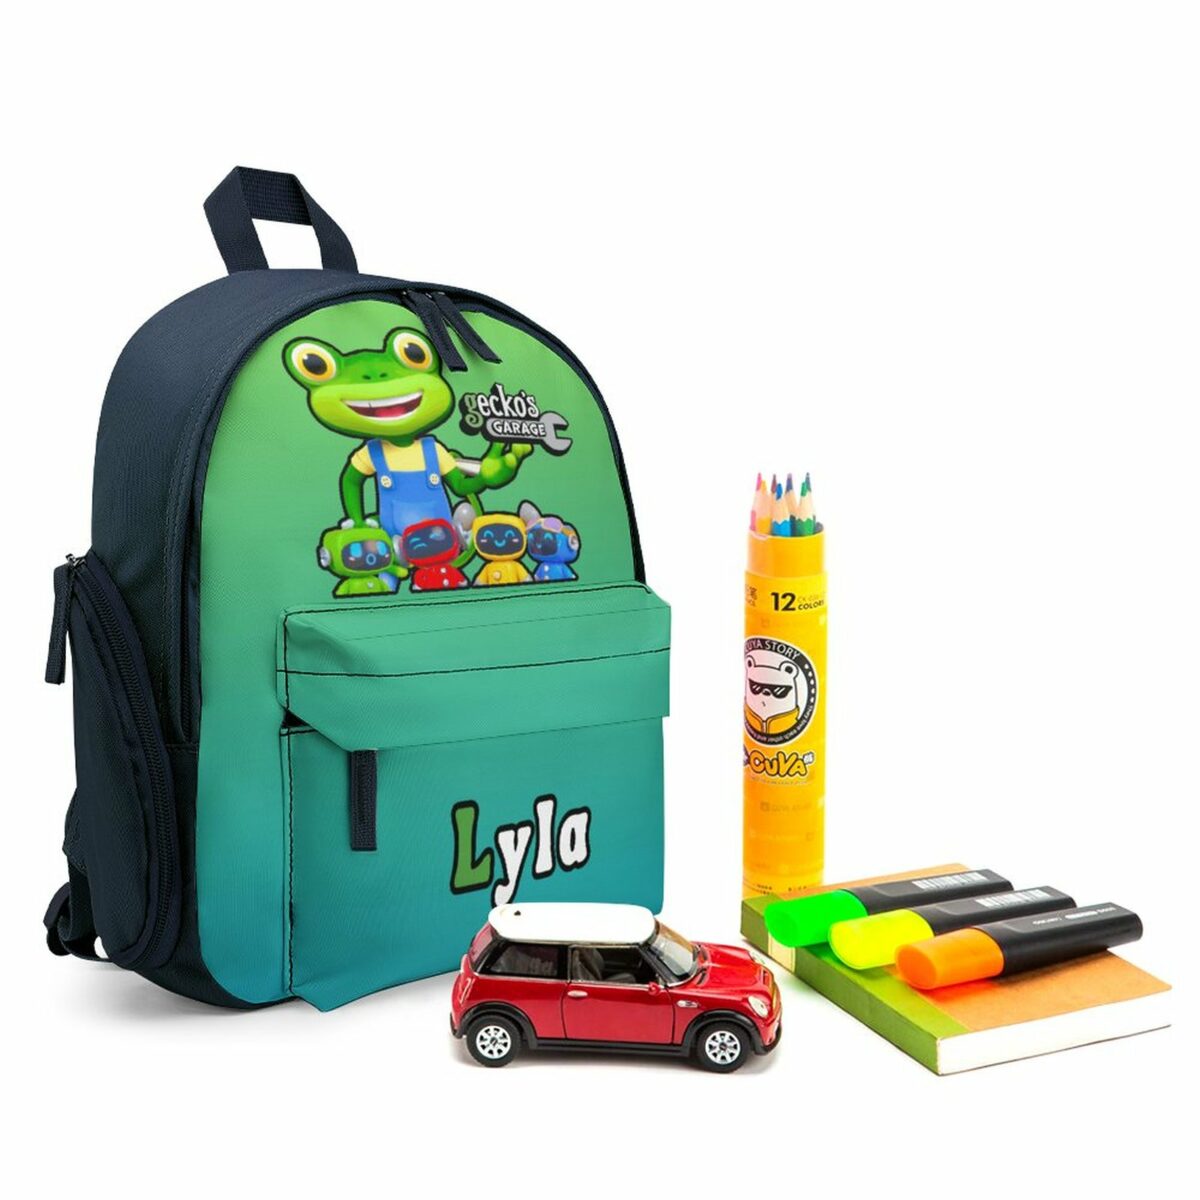 Gecko’s Garage Animated Series Character Children’s School Bag Cool Kiddo 18